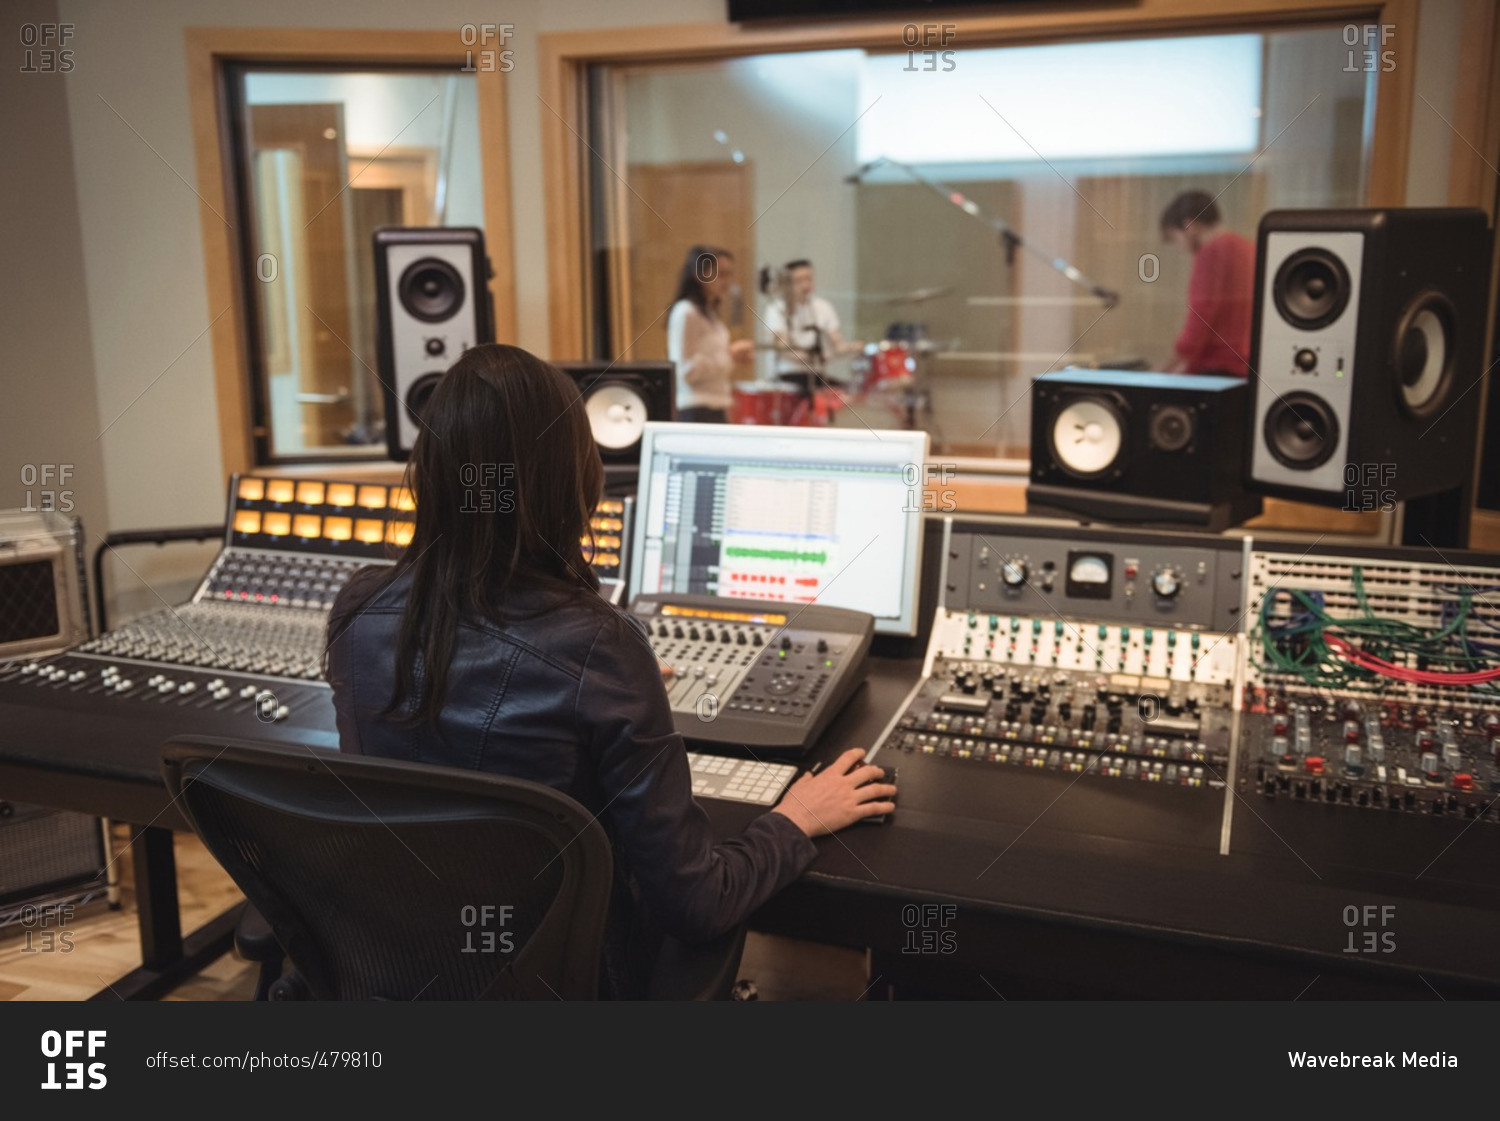 Audio engineer using sound mixer in recording studio